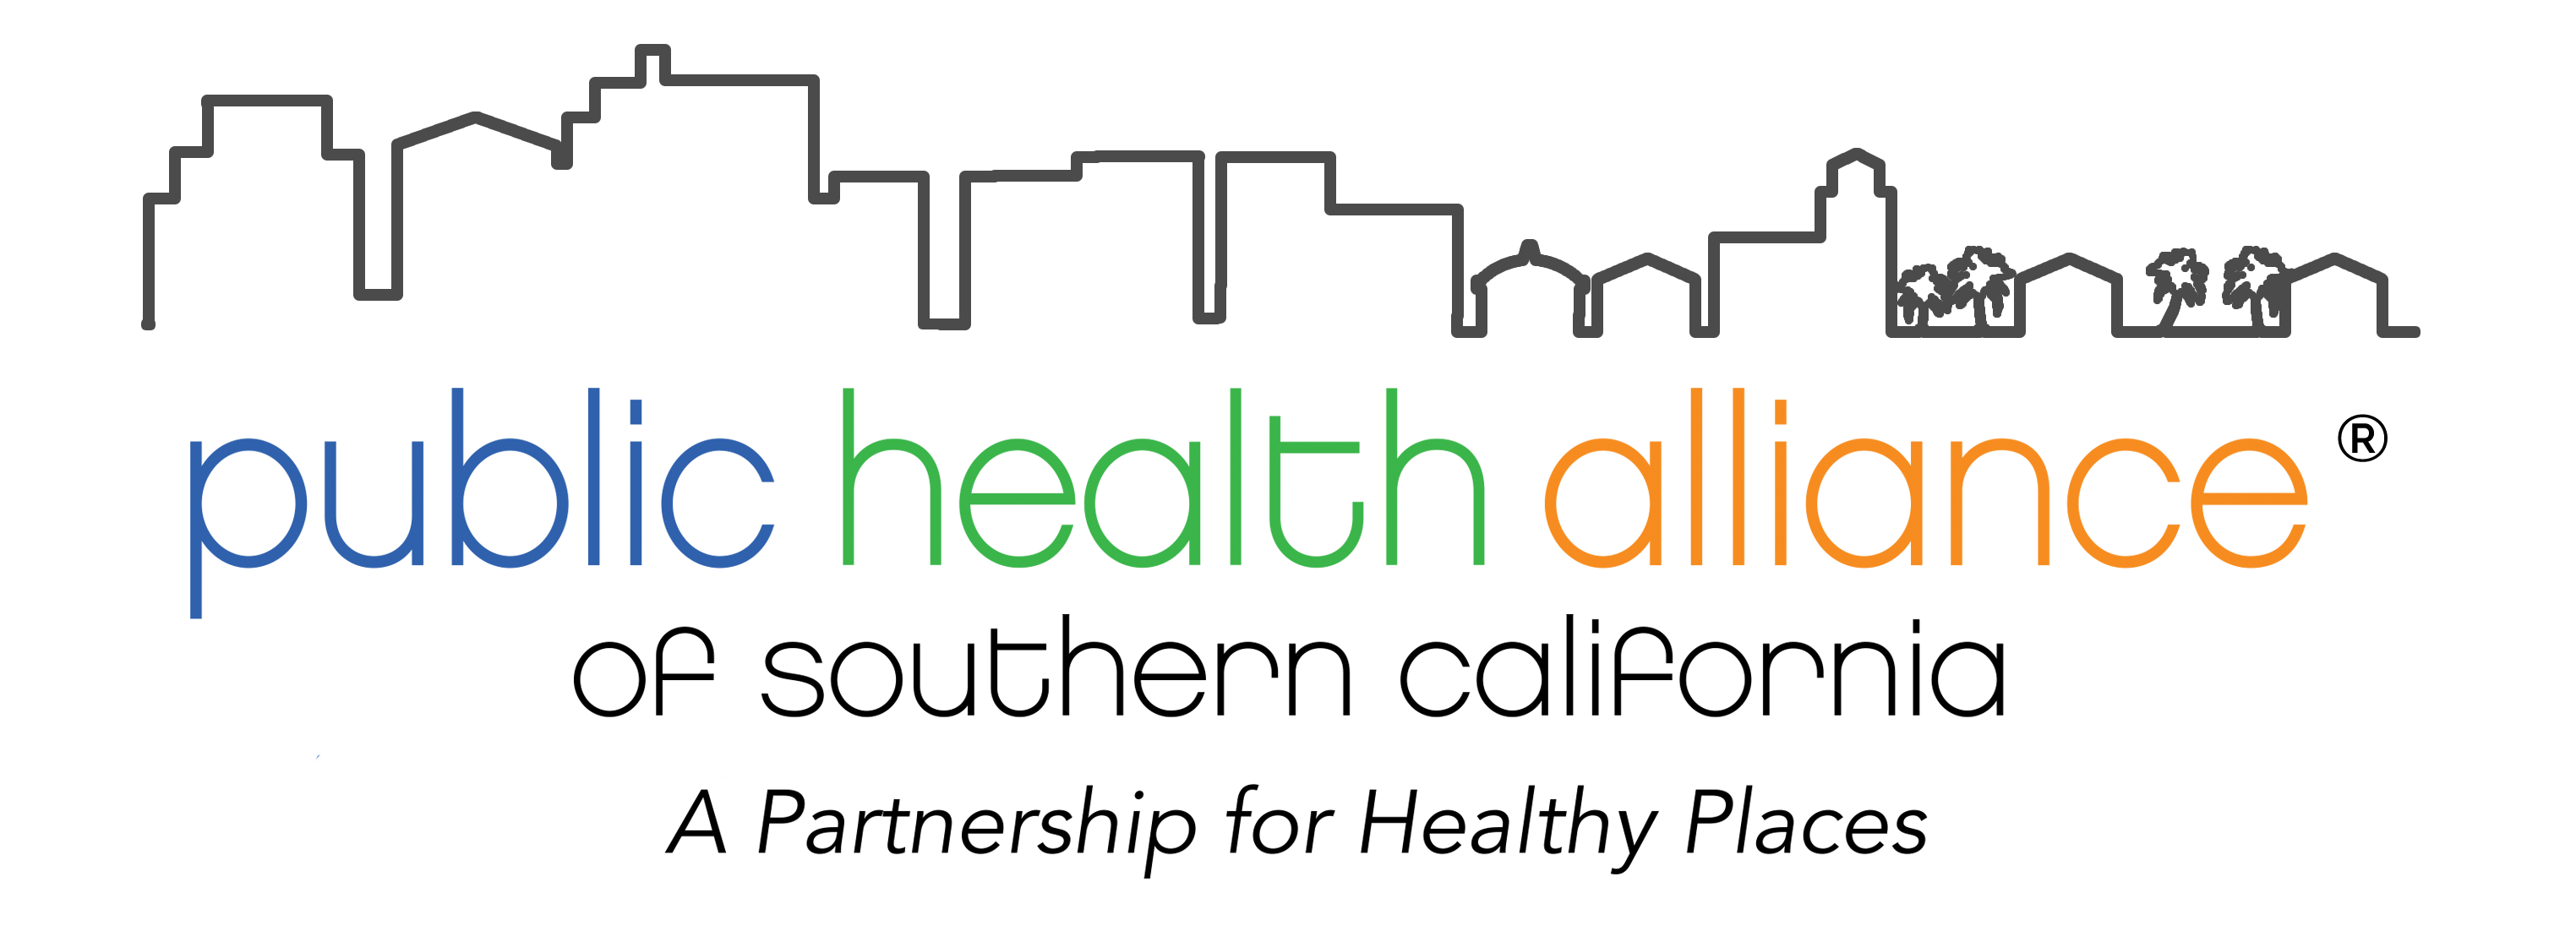 Public Health Alliance of Southern California